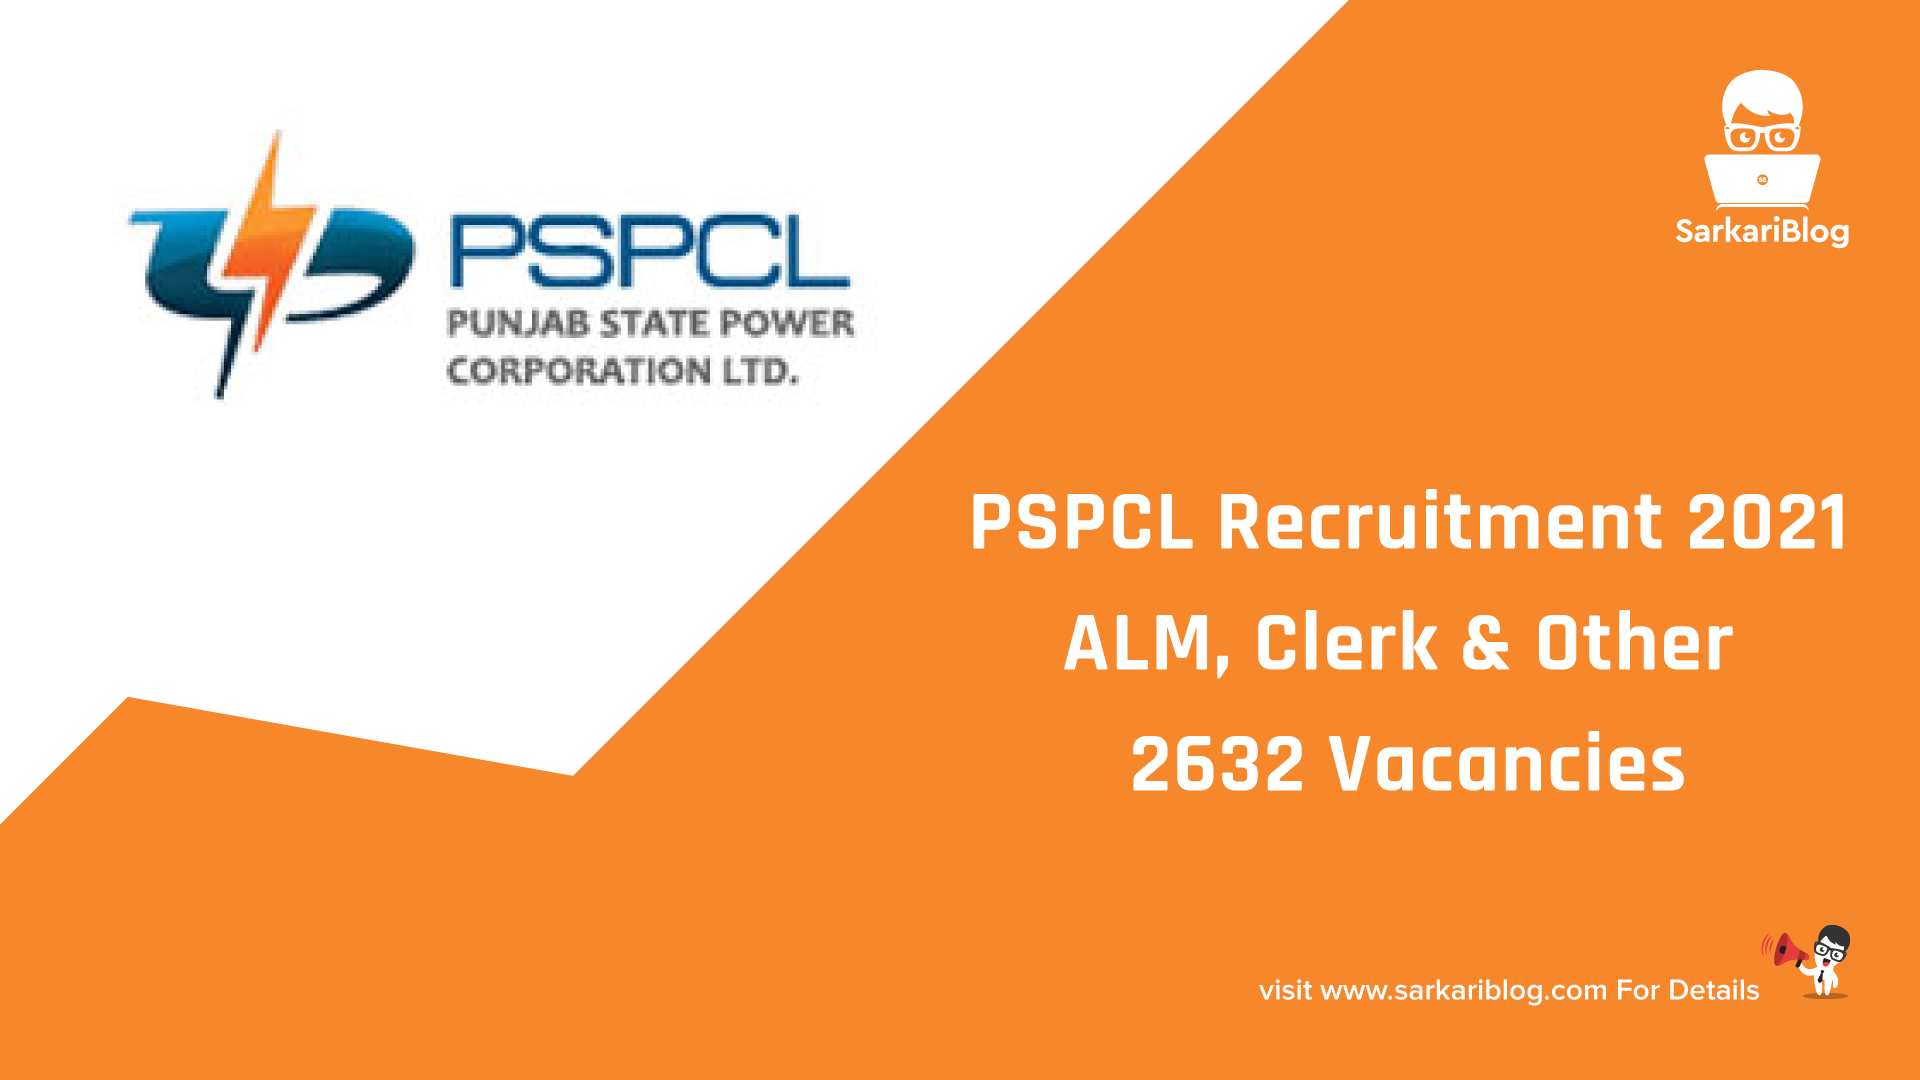 PSPCL Recruitment 2021, ALM, Clerk & Other 2632 Vacancies, Apply online